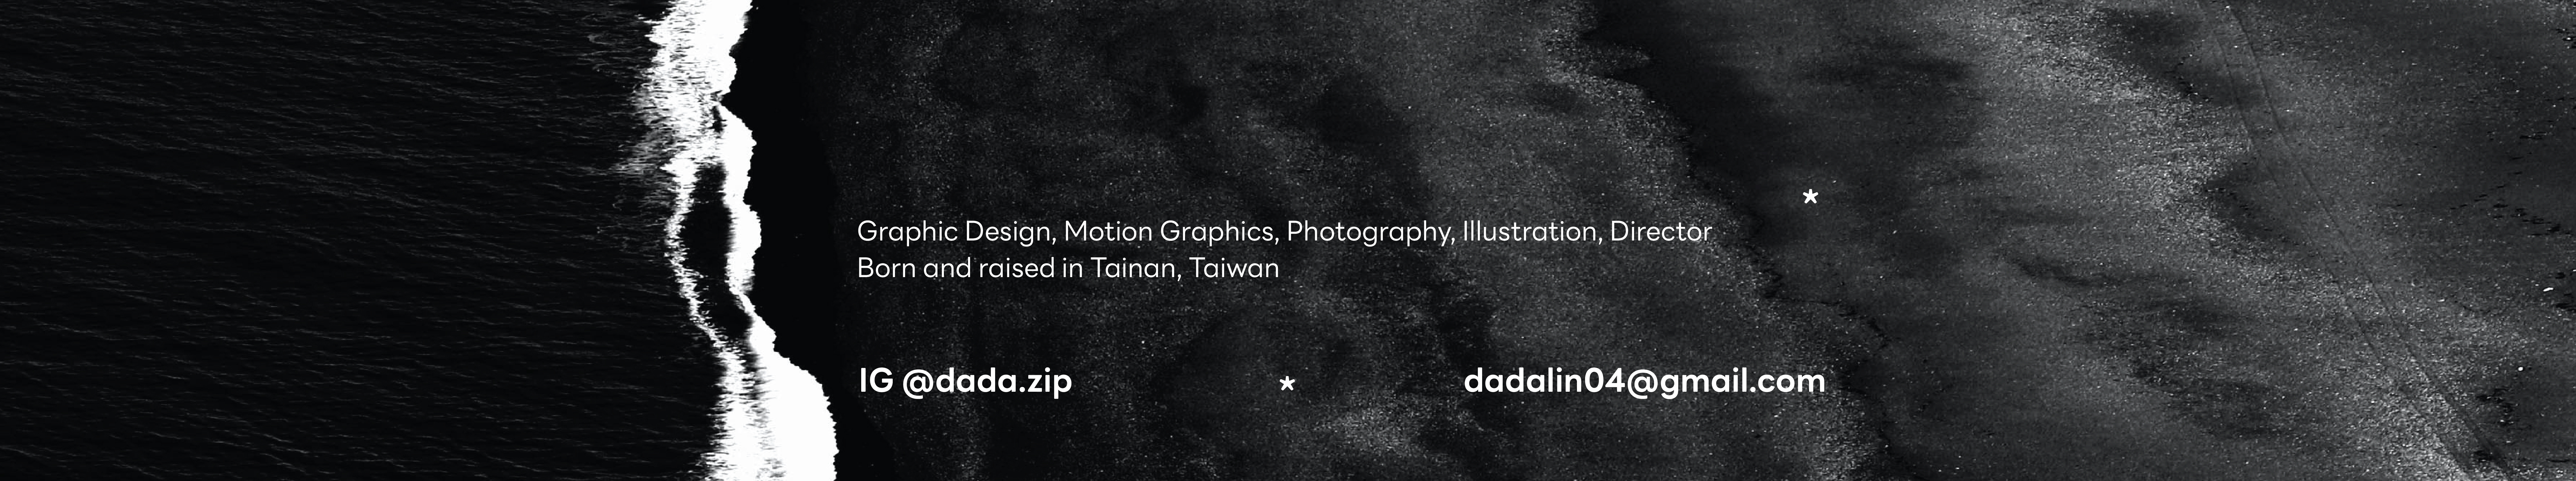 Dada Lin's profile banner